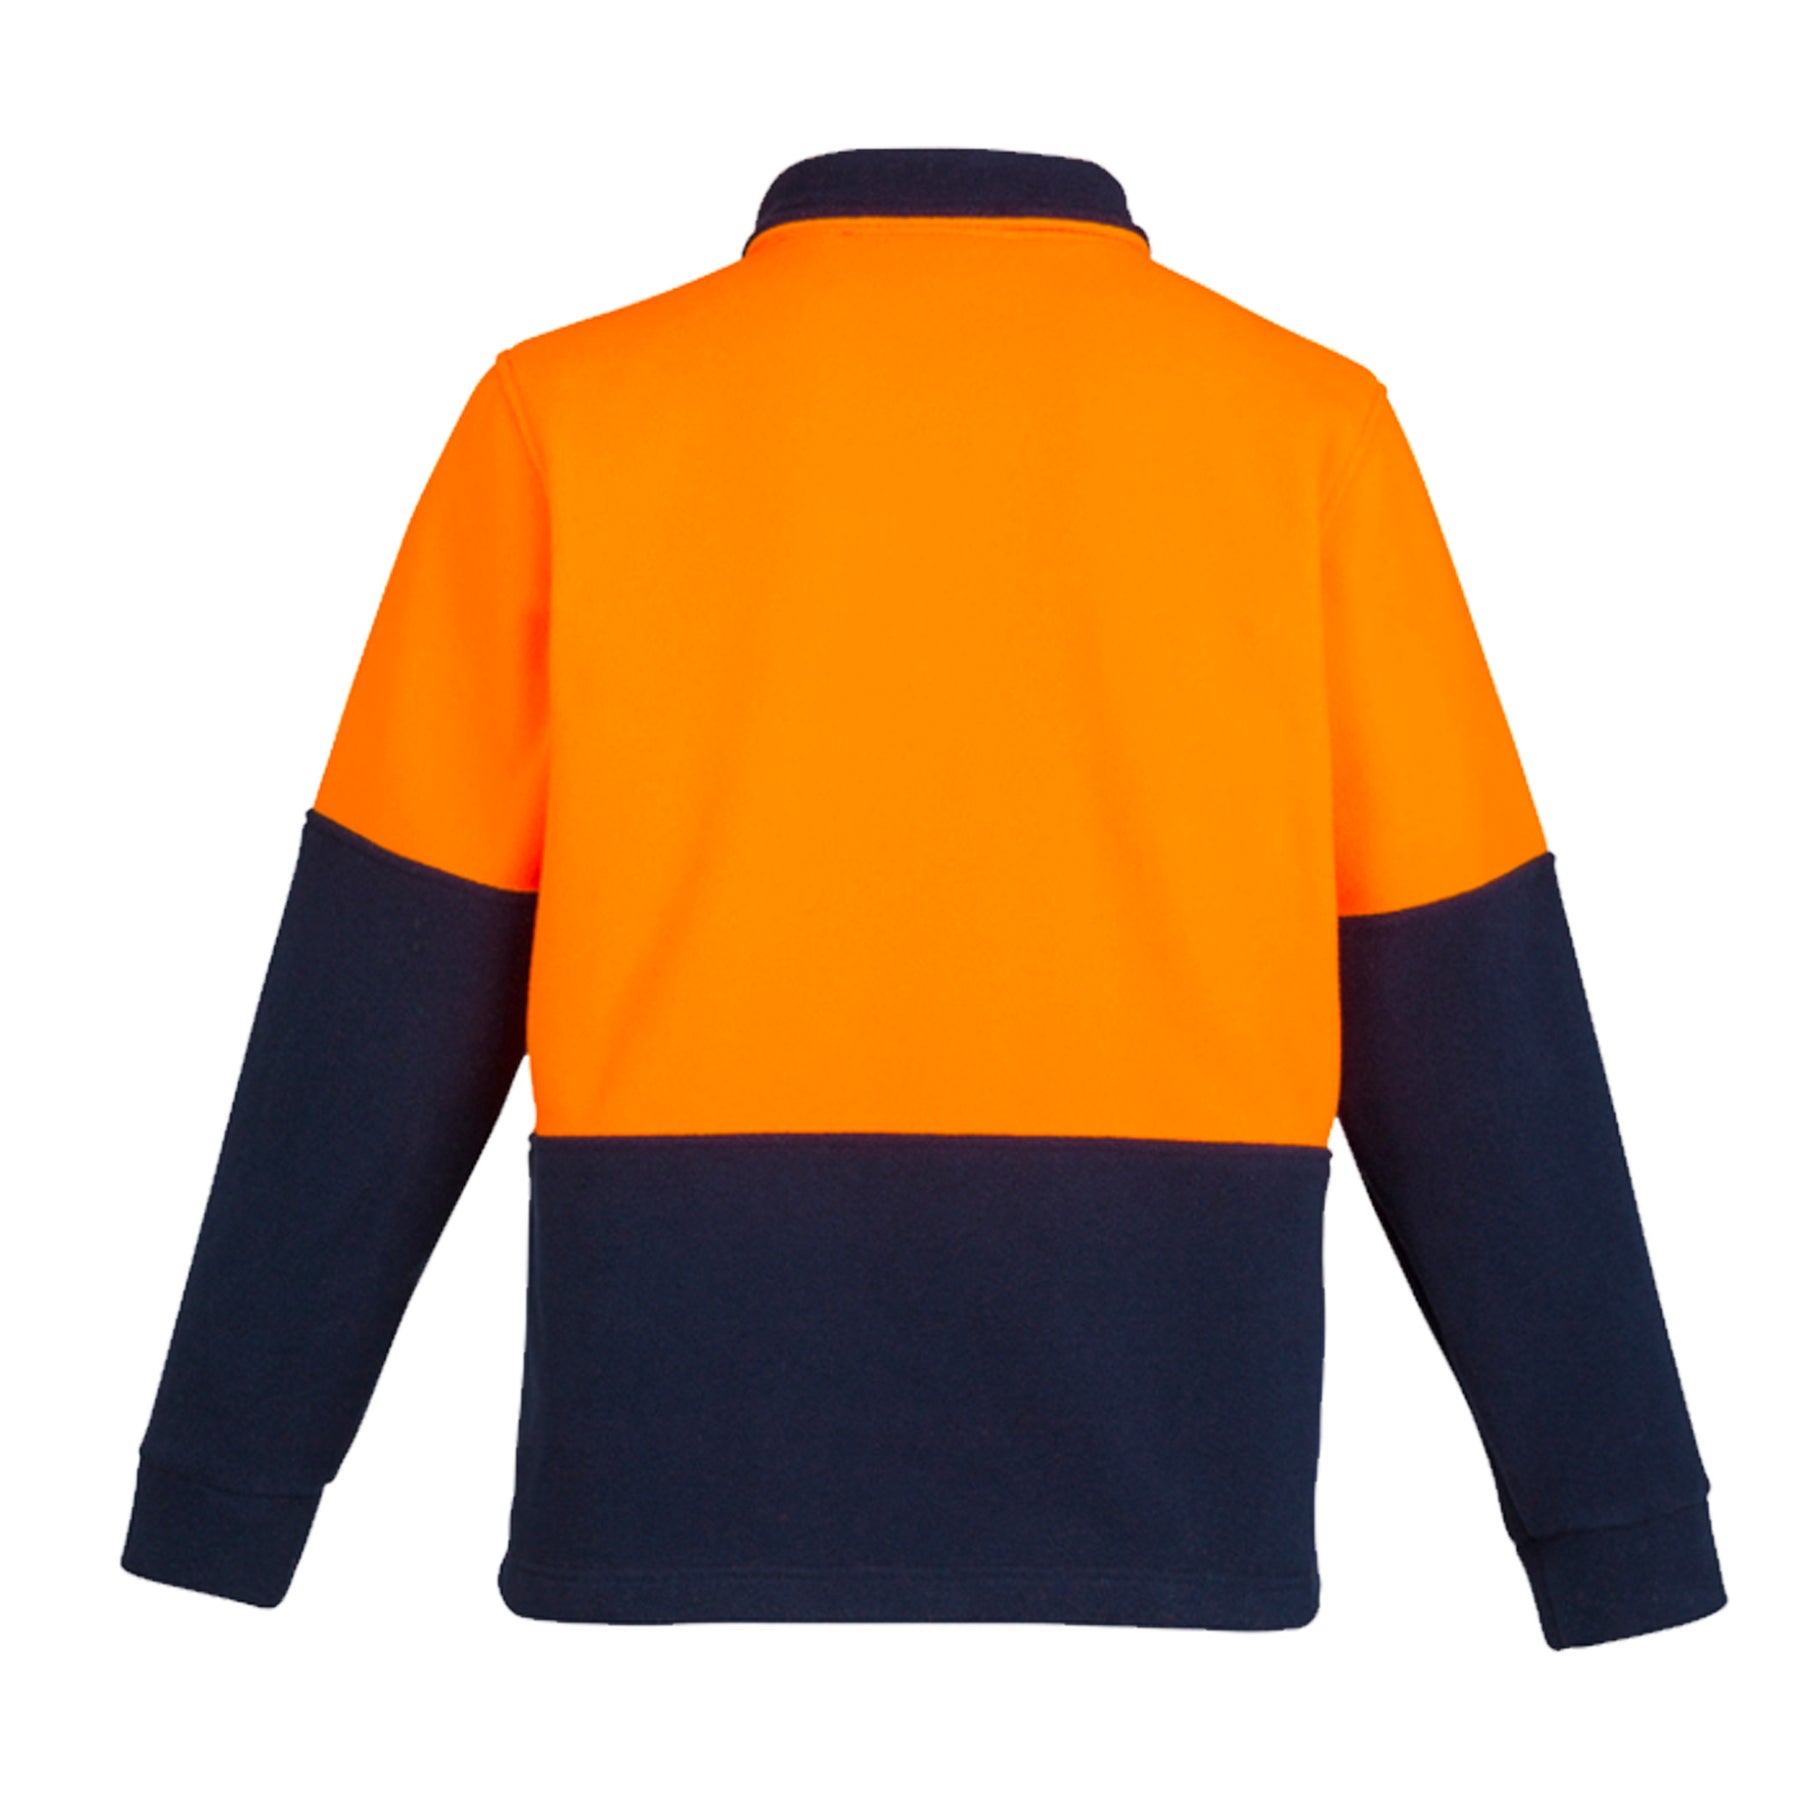 syzmik back of unisex fleece jumper in orange navy